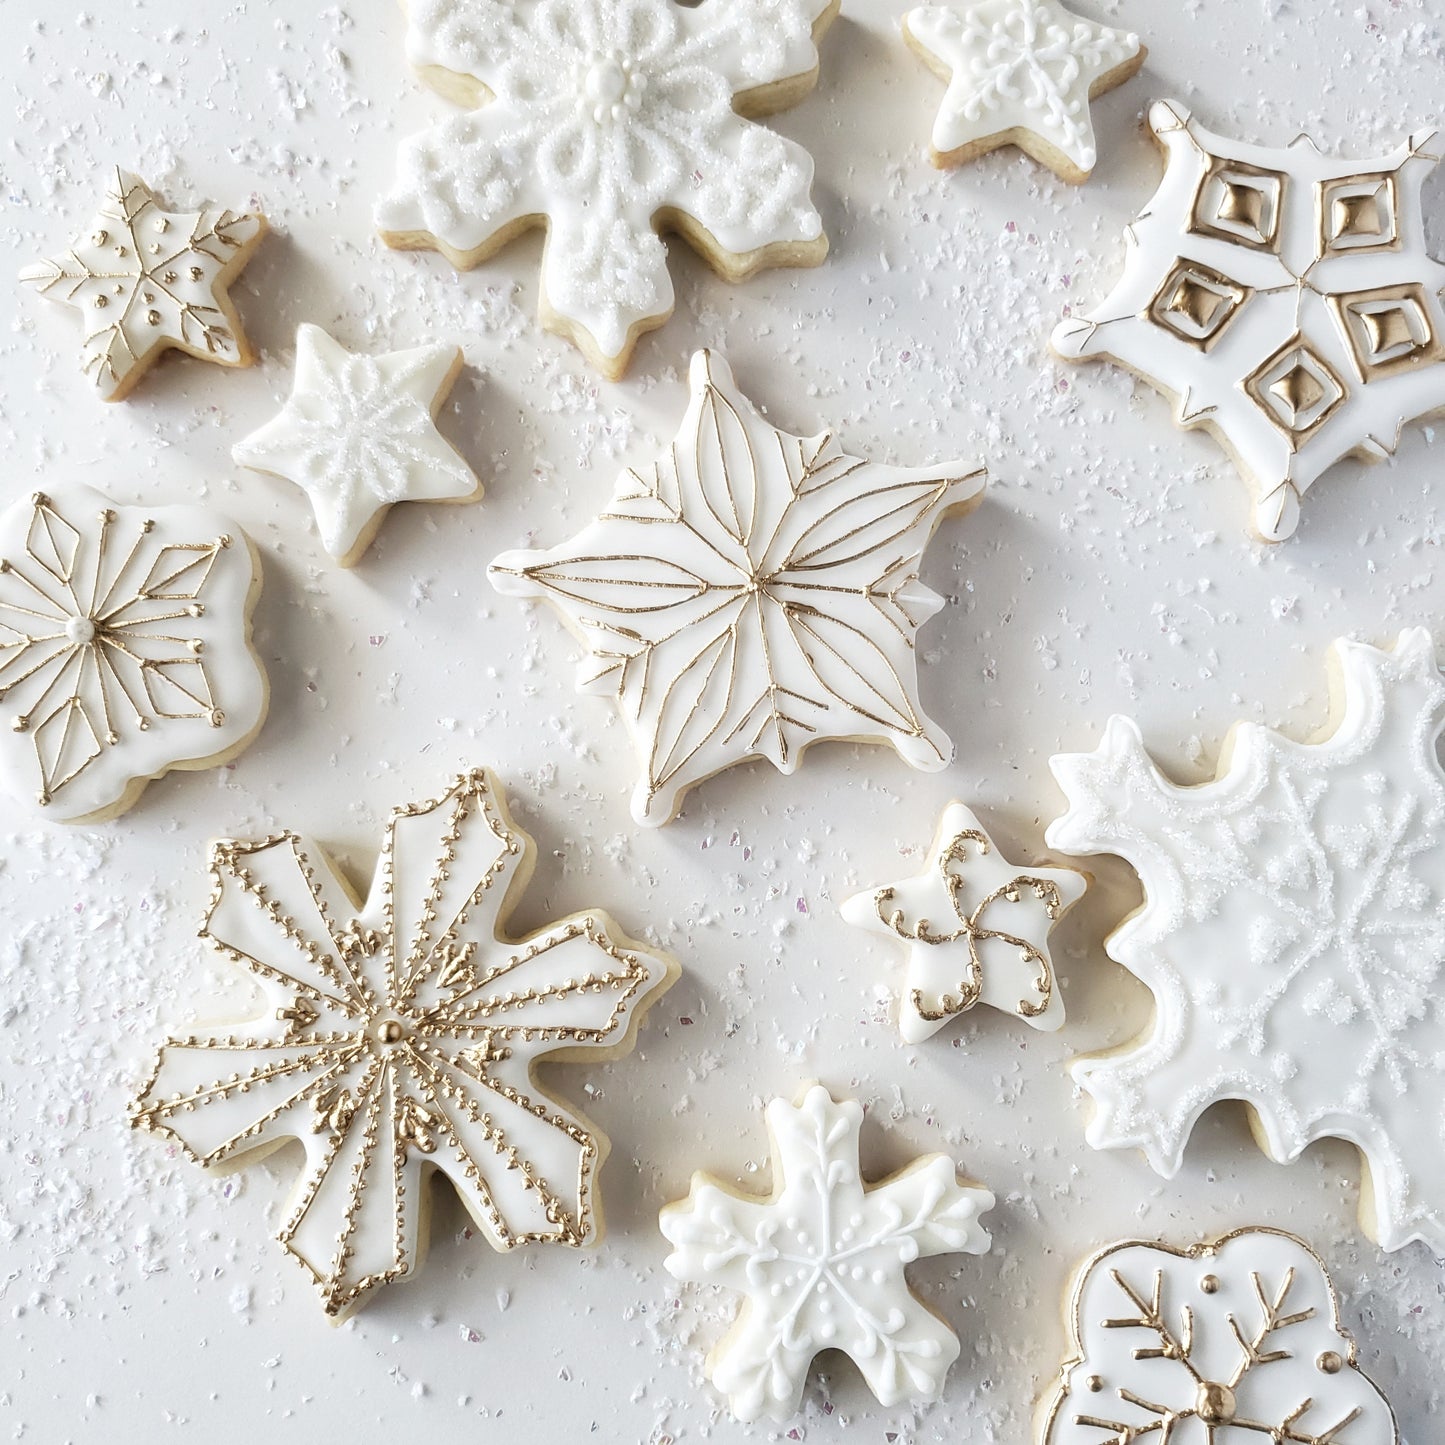 Snowflake Ornament Cookies (SUN Dec 17th)